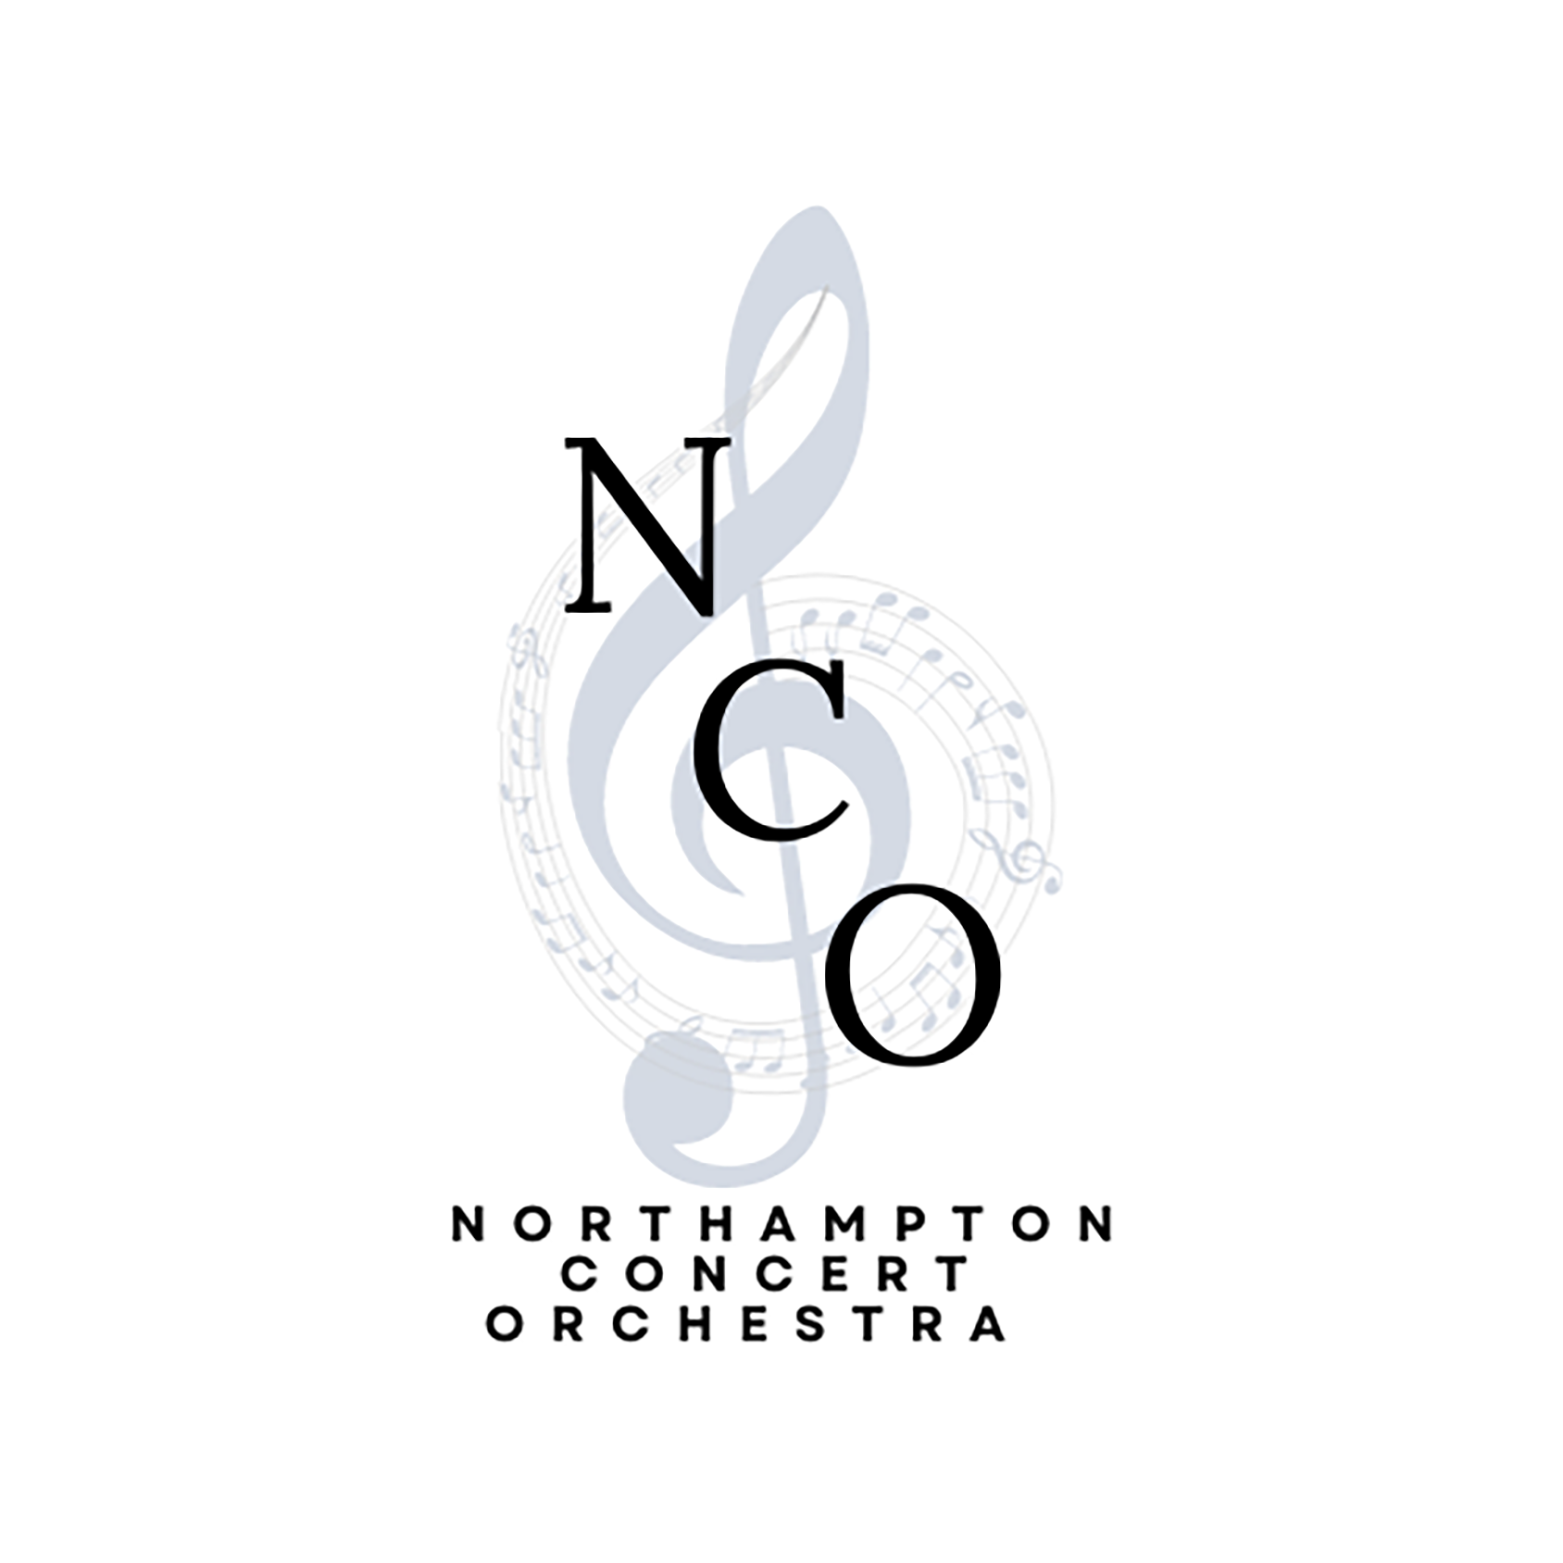 Northampton Concert Orchestra